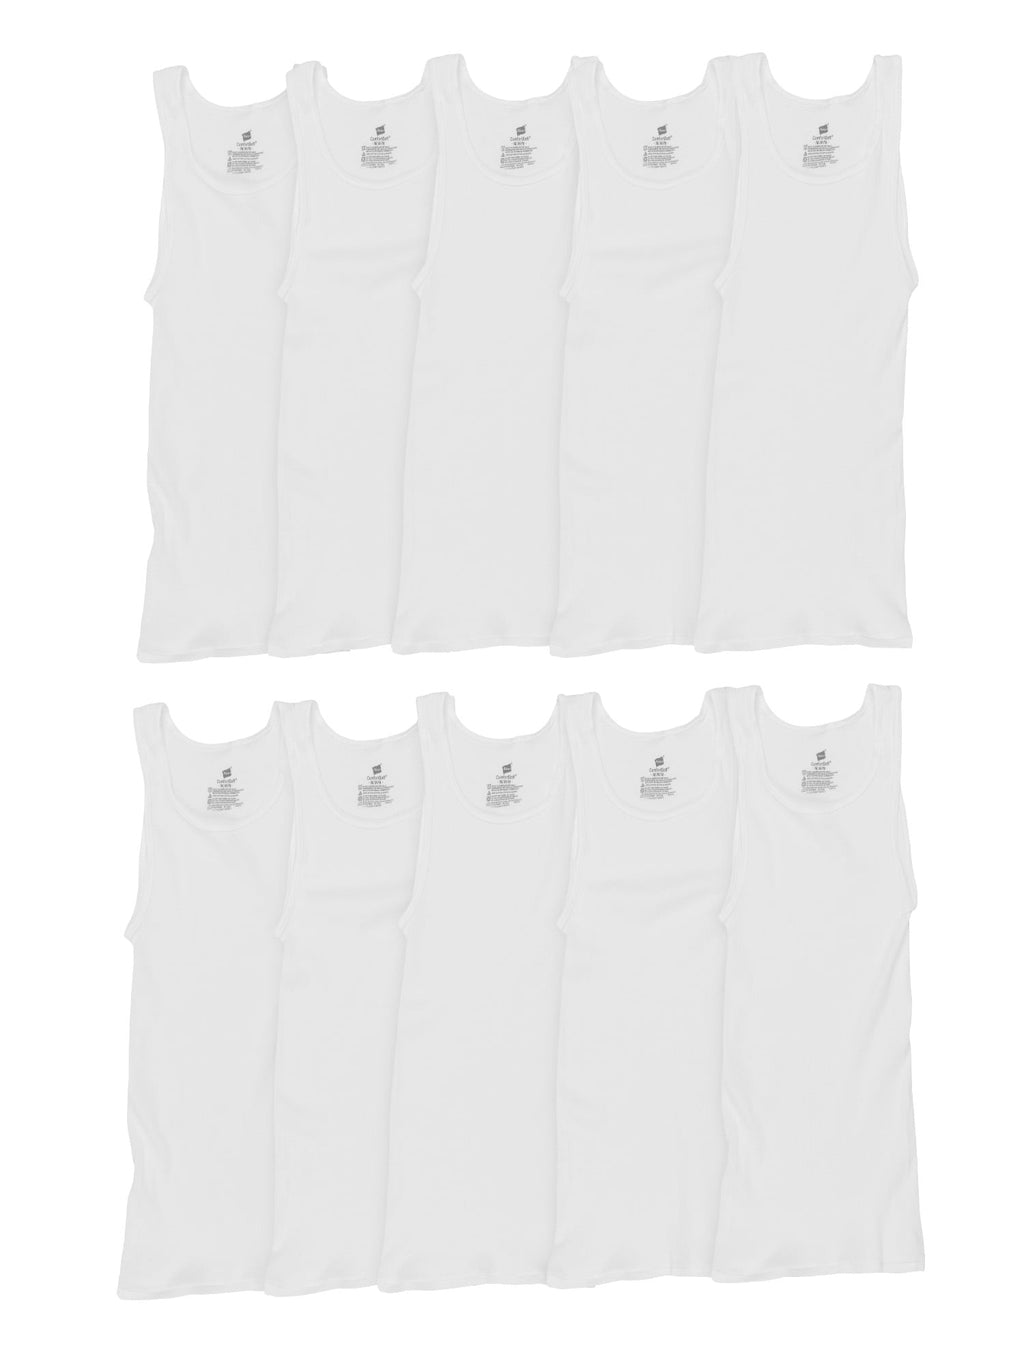 Hanes Men's Super Value Pack White Tank Undershirts, 10 Pack - image 1 of 9